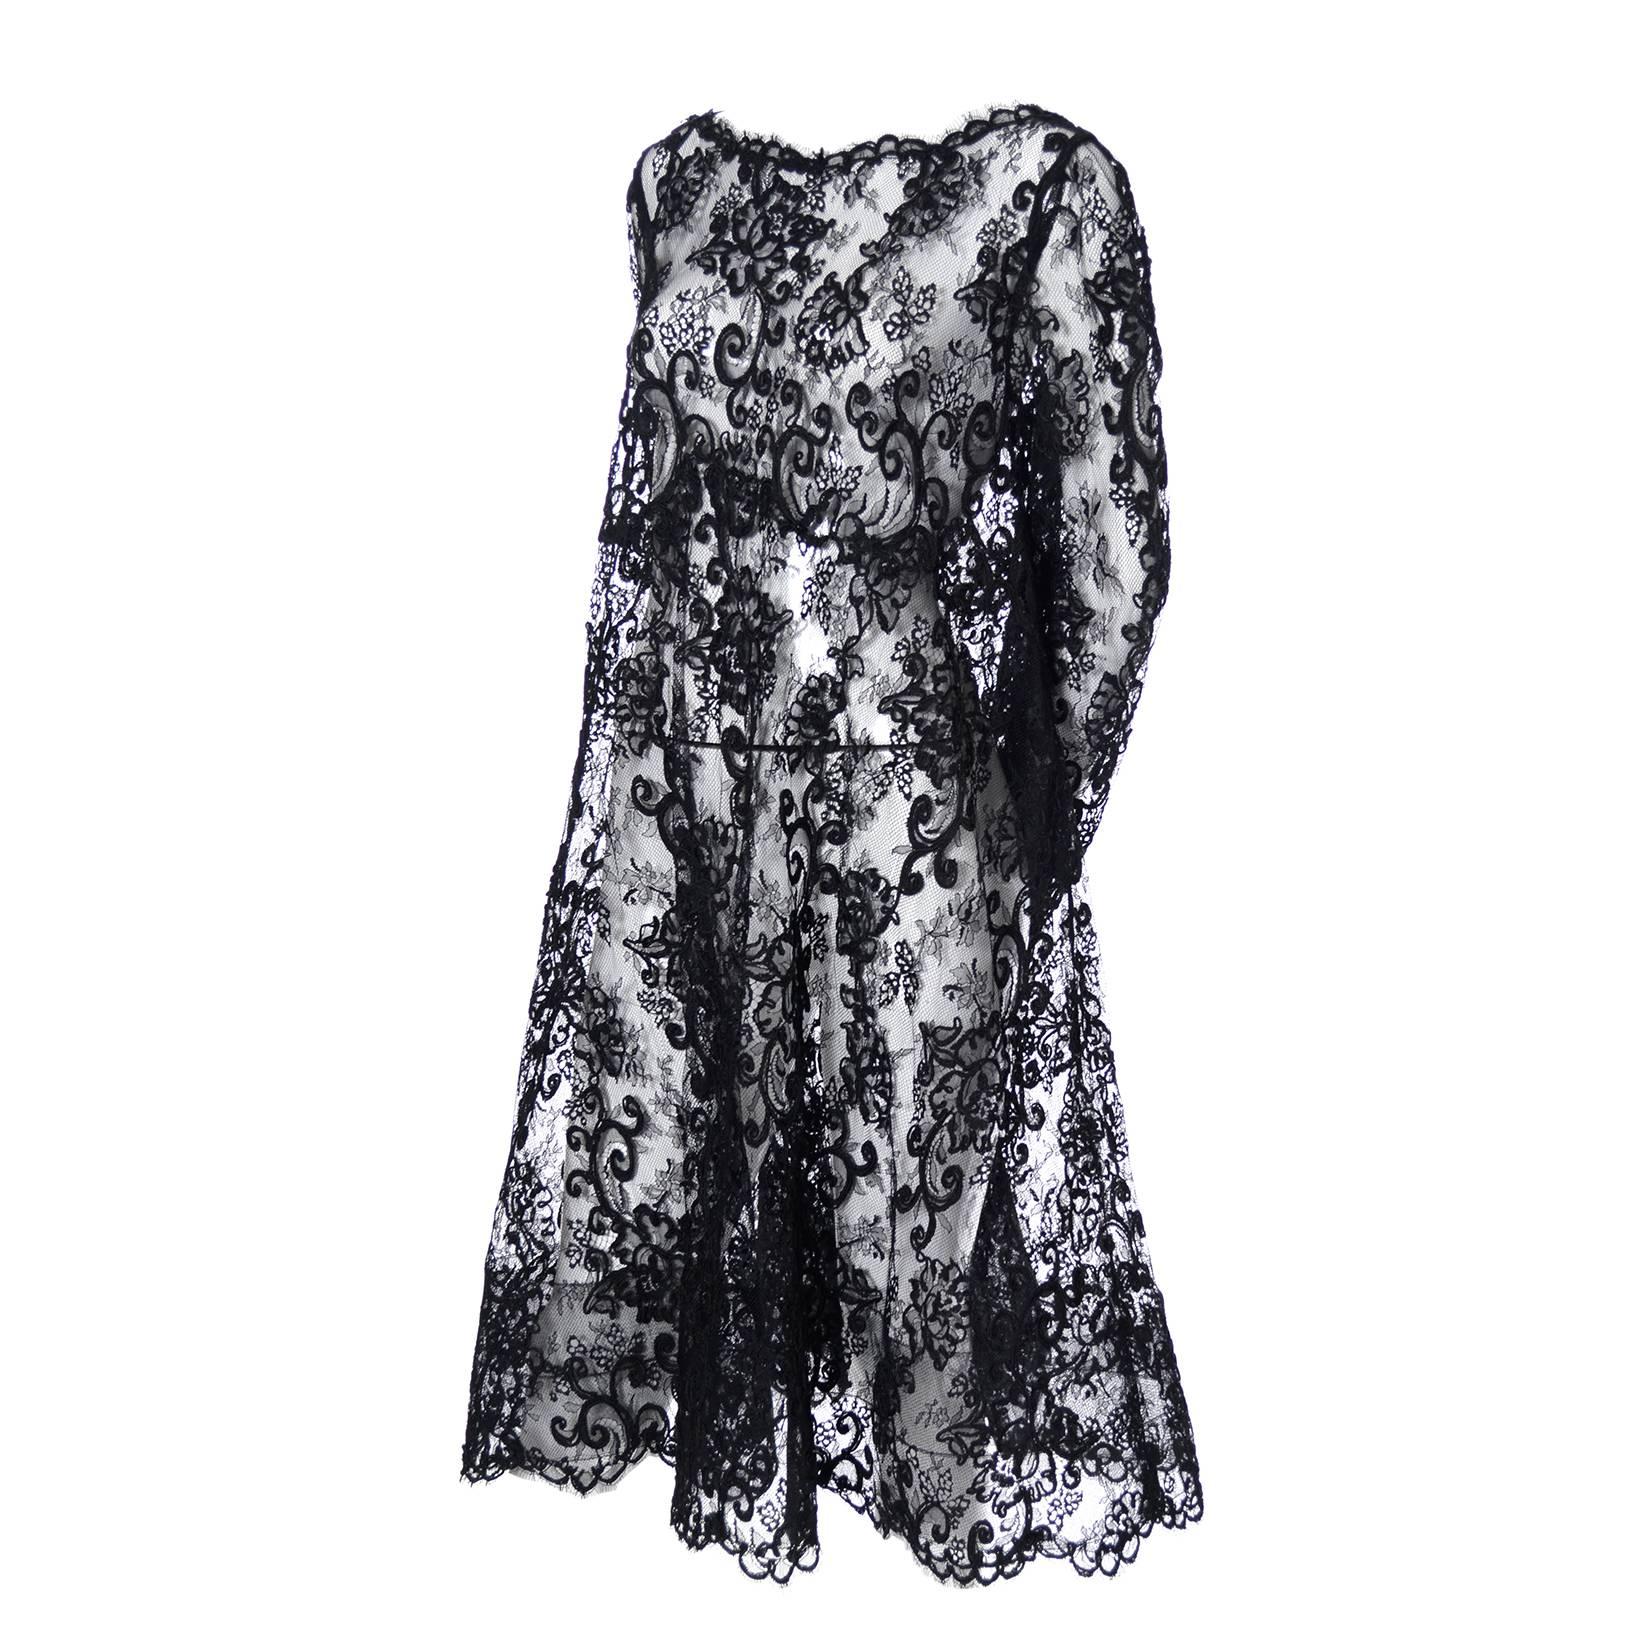 All Lace Oscar de la Renta Dress Black Evening Vintage Trapeze Dress